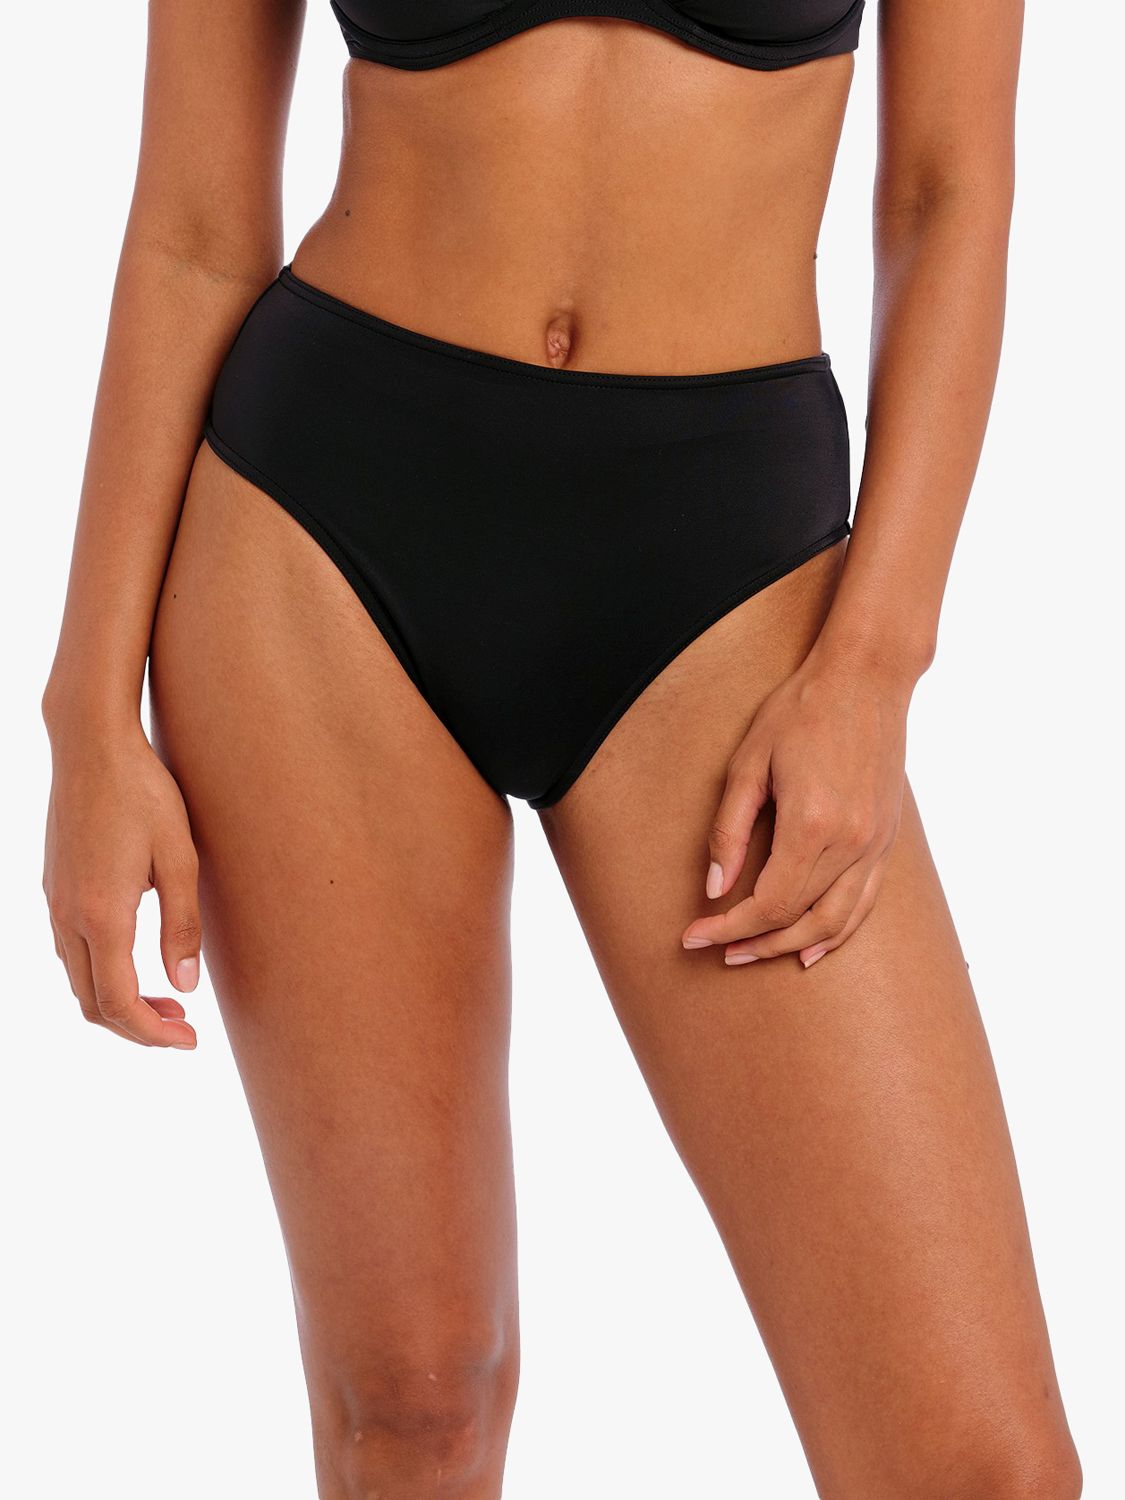 Freya Jewel Cove Plain High Waist Bikini Bottoms, Black, S